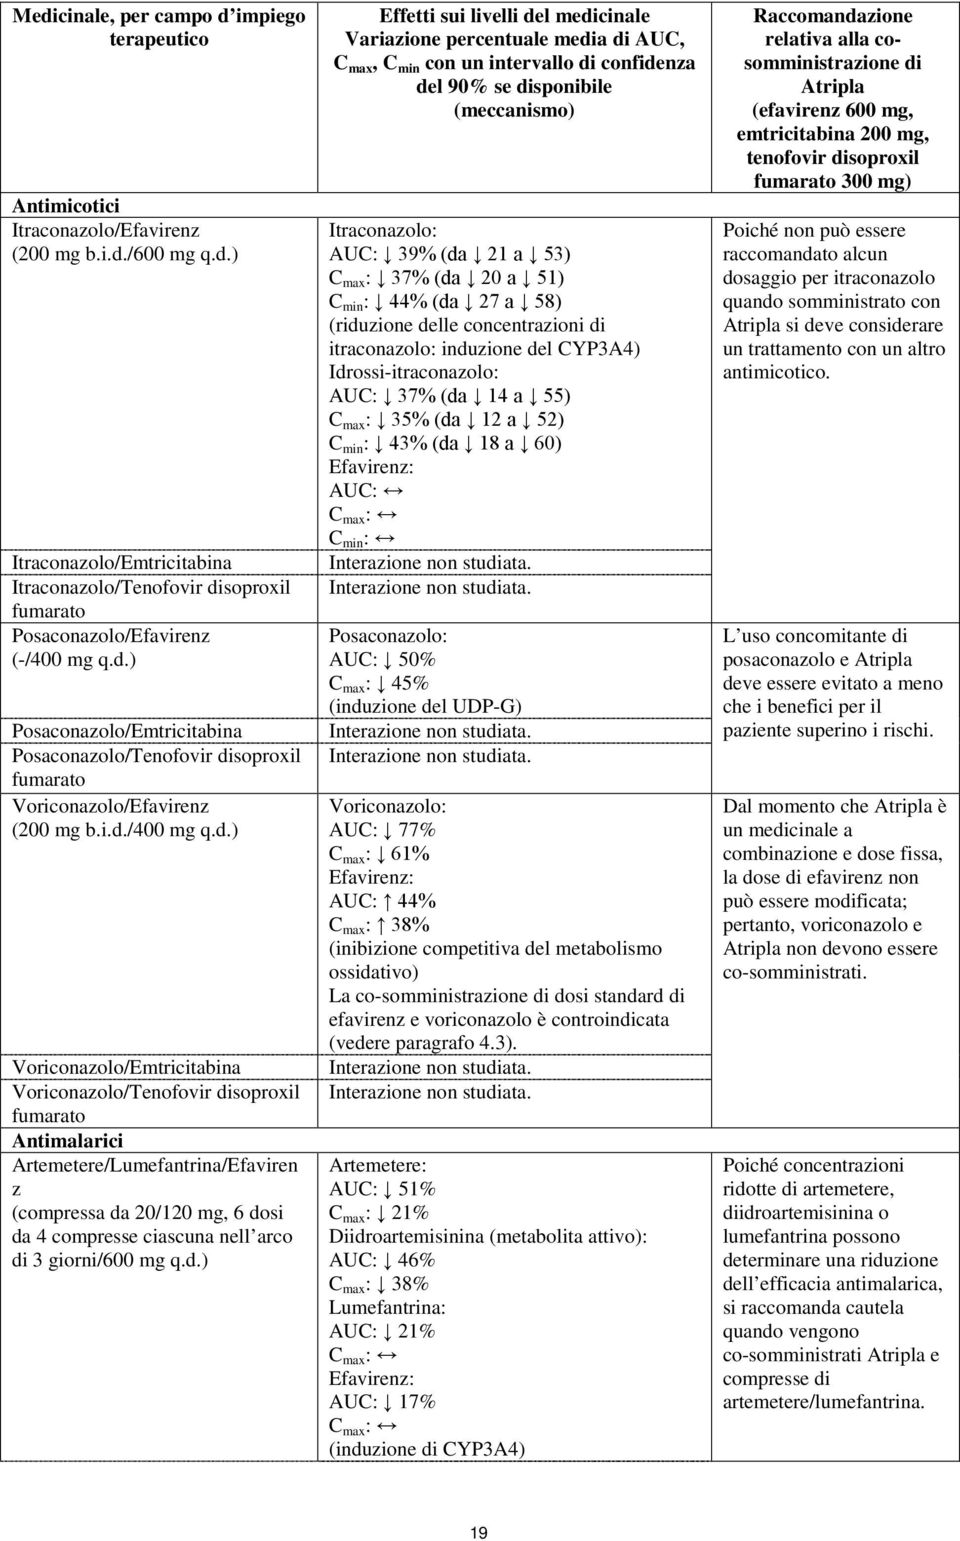 Antimalarici Artemetere/Lumefantrina/Efaviren z (compressa da